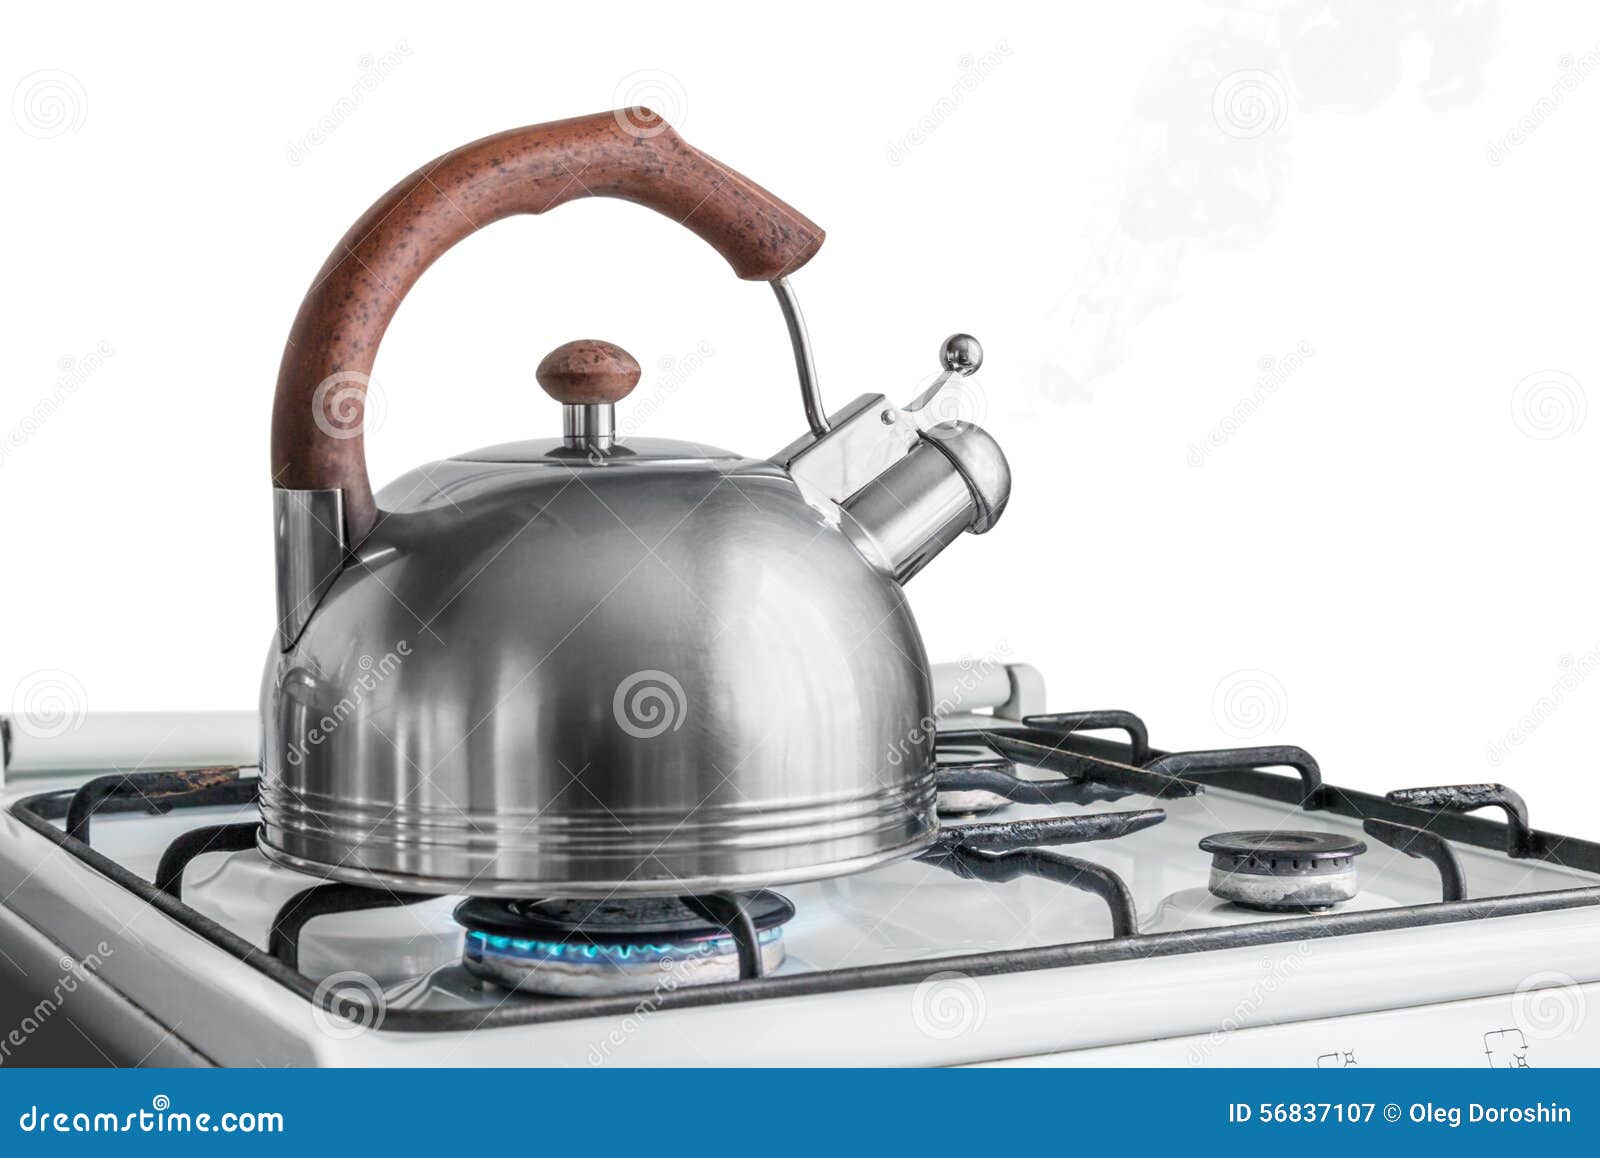 https://thumbs.dreamstime.com/z/kettle-boiling-gas-stove-focus-spout-56837107.jpg